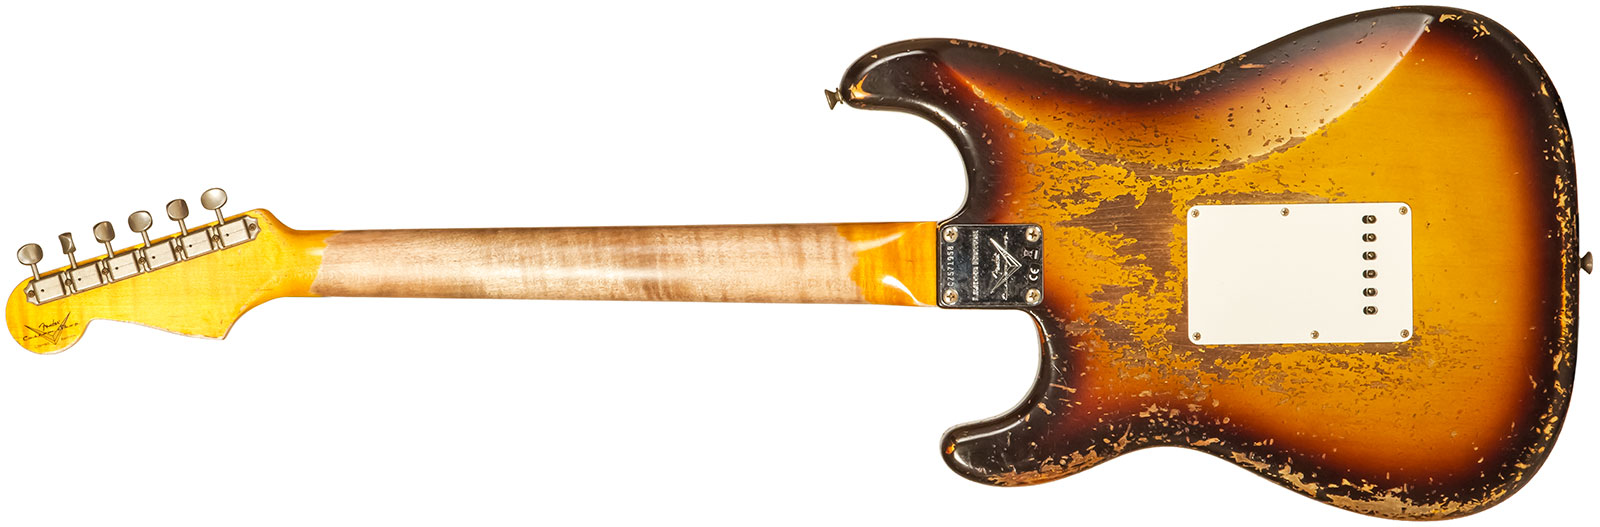 Fender Custom Shop Strat 1959 3s Trem Rw #cz571958 - Super Heavy Relic Aged Chocolate 3-color Sunburst - E-Gitarre in Str-Form - Variation 1